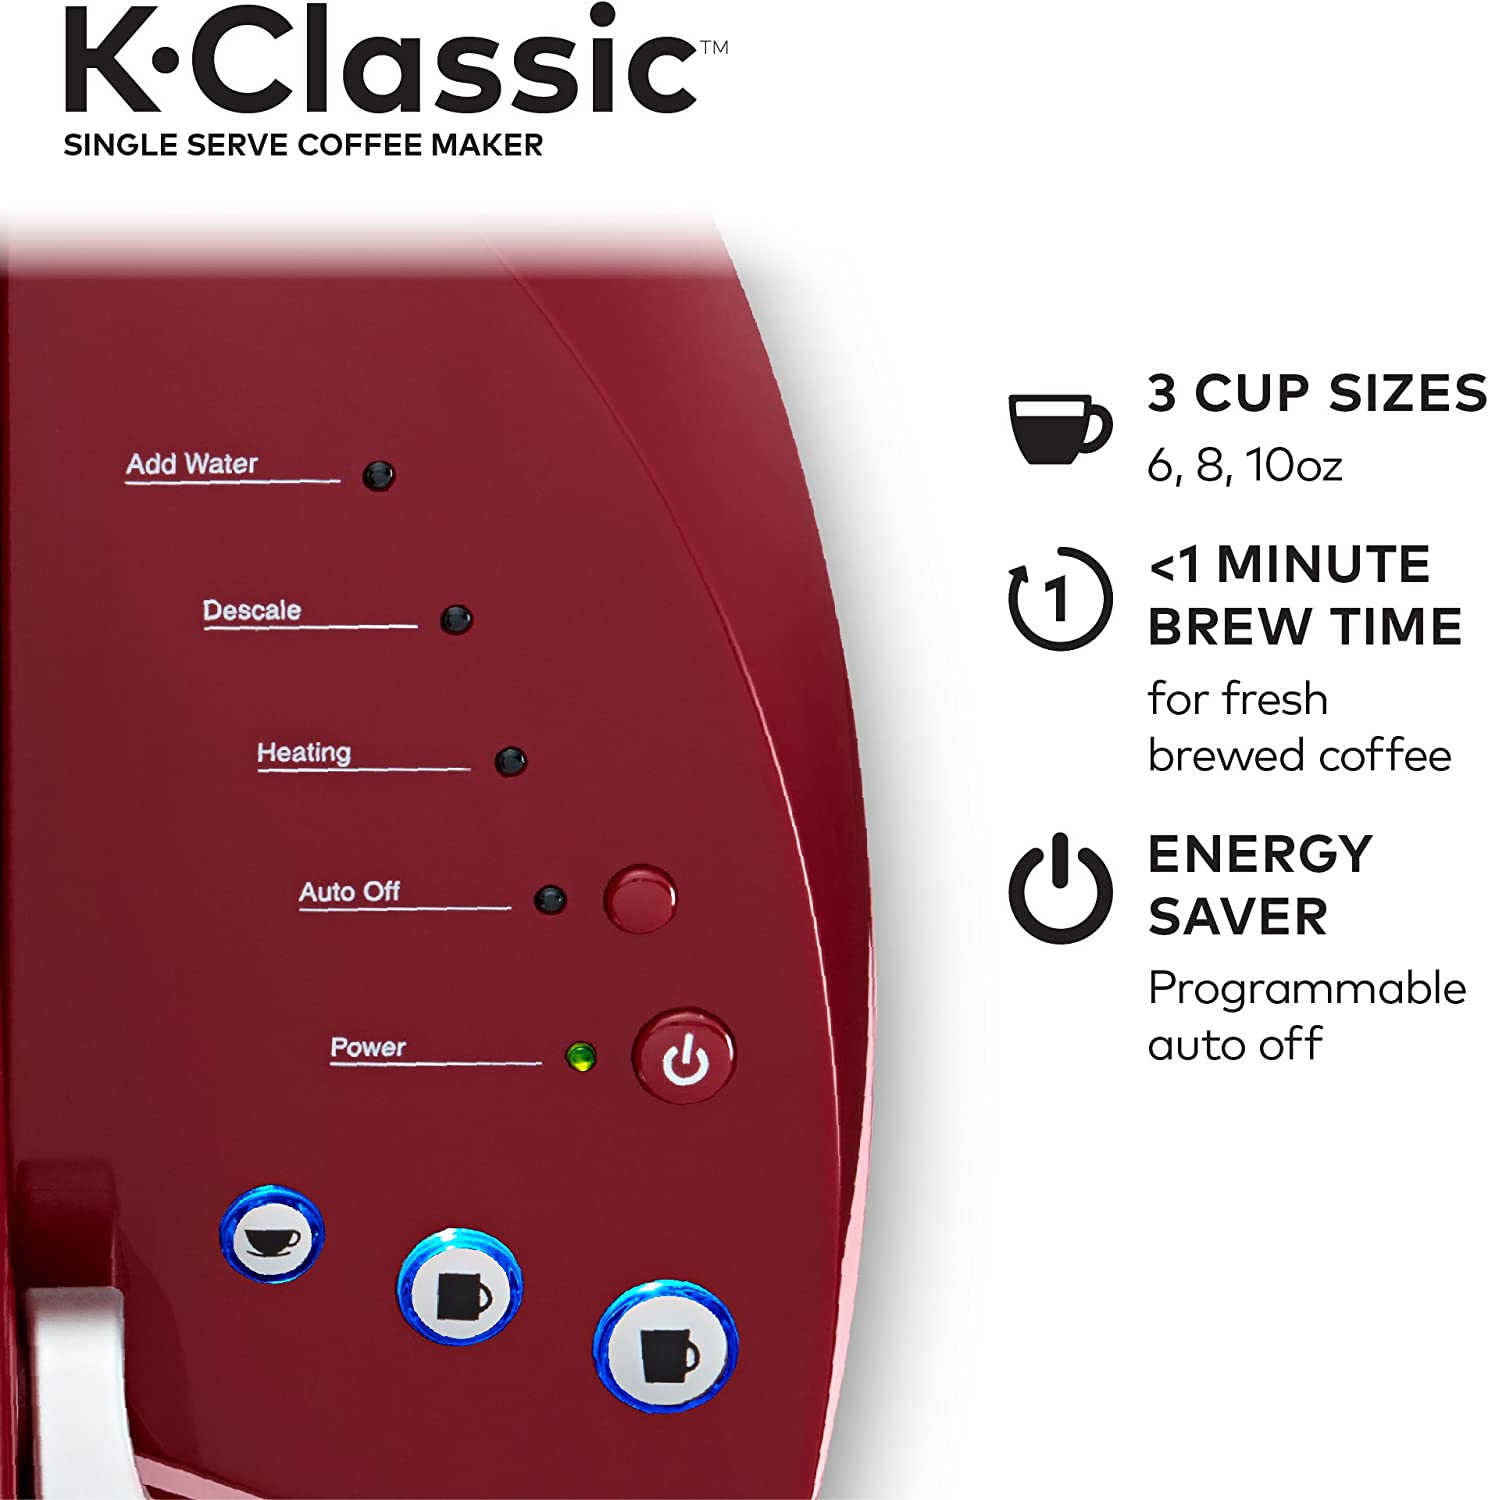 Keurig K-Classic Coffee Maker, Single Serve K-Cup Pod Coffee Brewer, 6 to  10 Oz. Brew Sizes, Rhubarb